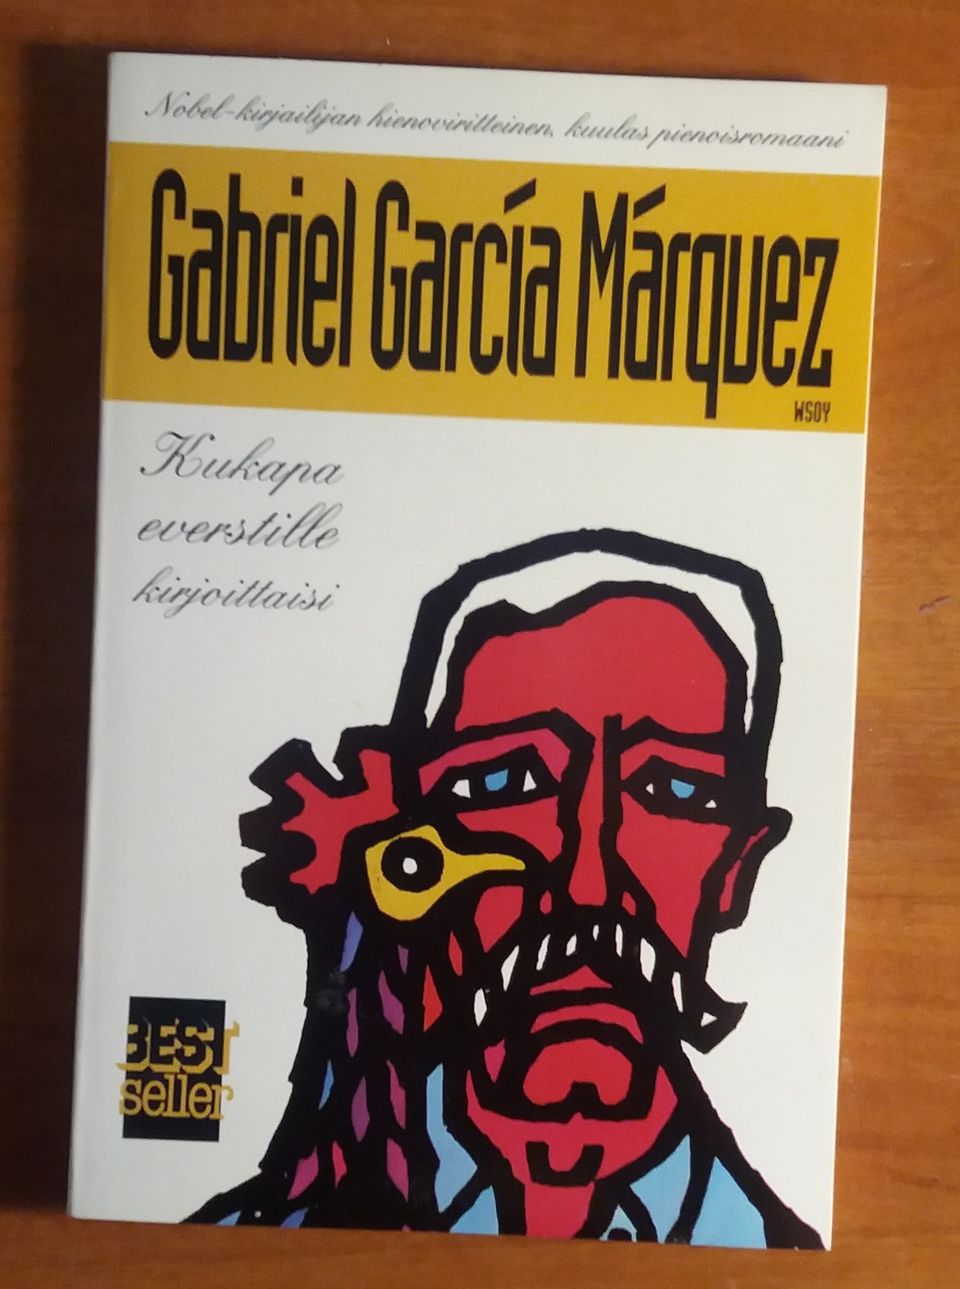 Marques Gabriel Garcia KUKAPA EVERSTILLE KIRJOITTAISI Wsoy 4p 1992